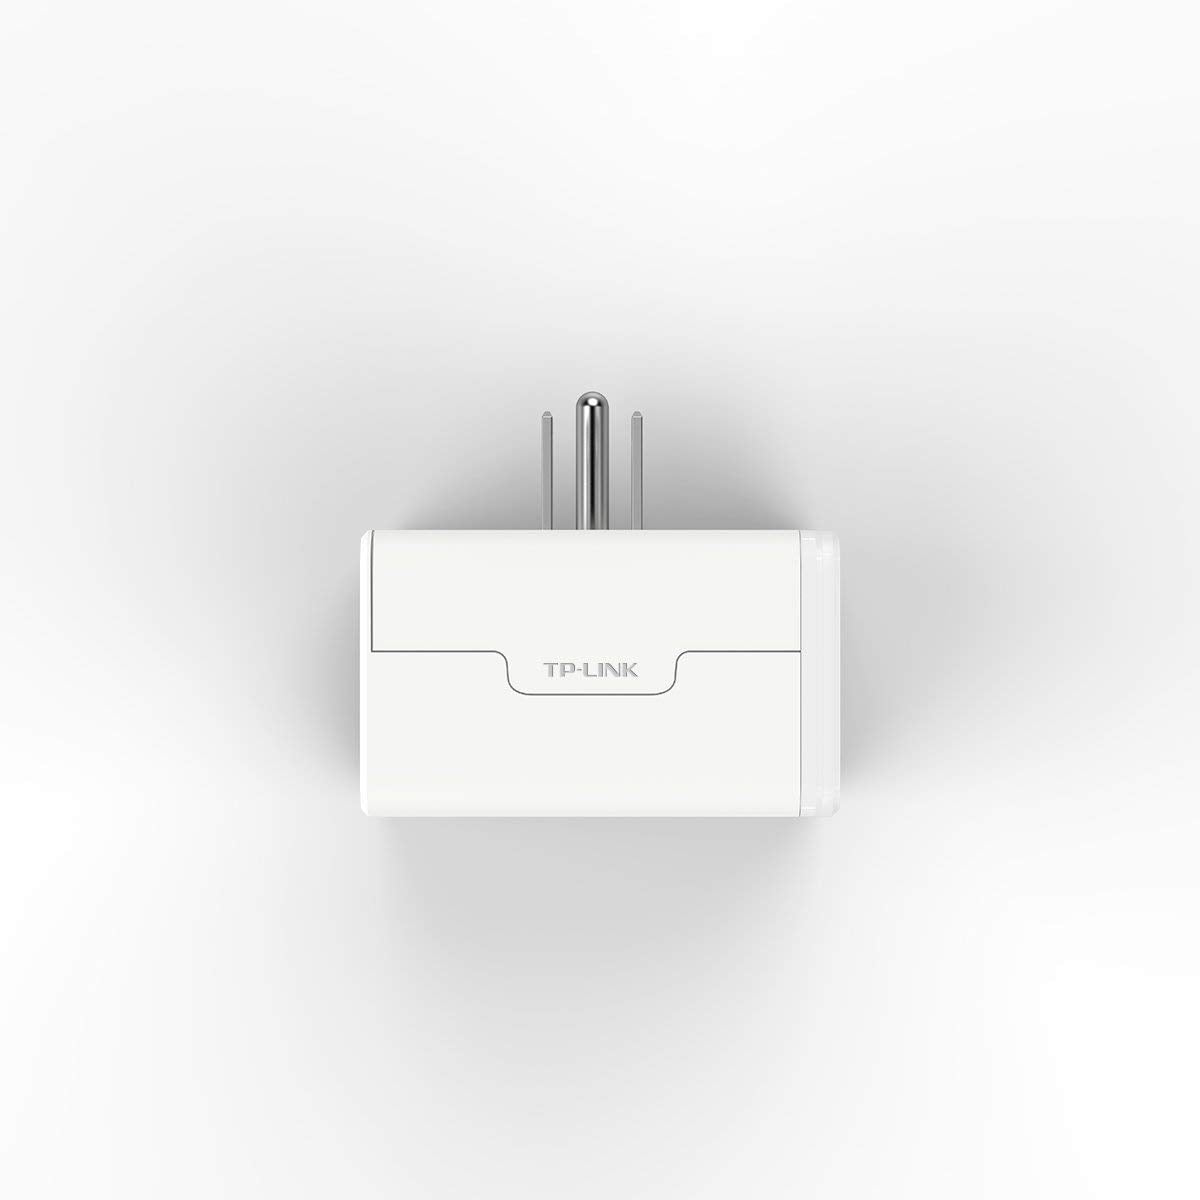 (Open Box) TP-Link Smart Plug Mini, Wi-Fi, Works with Alexa, (HS105)